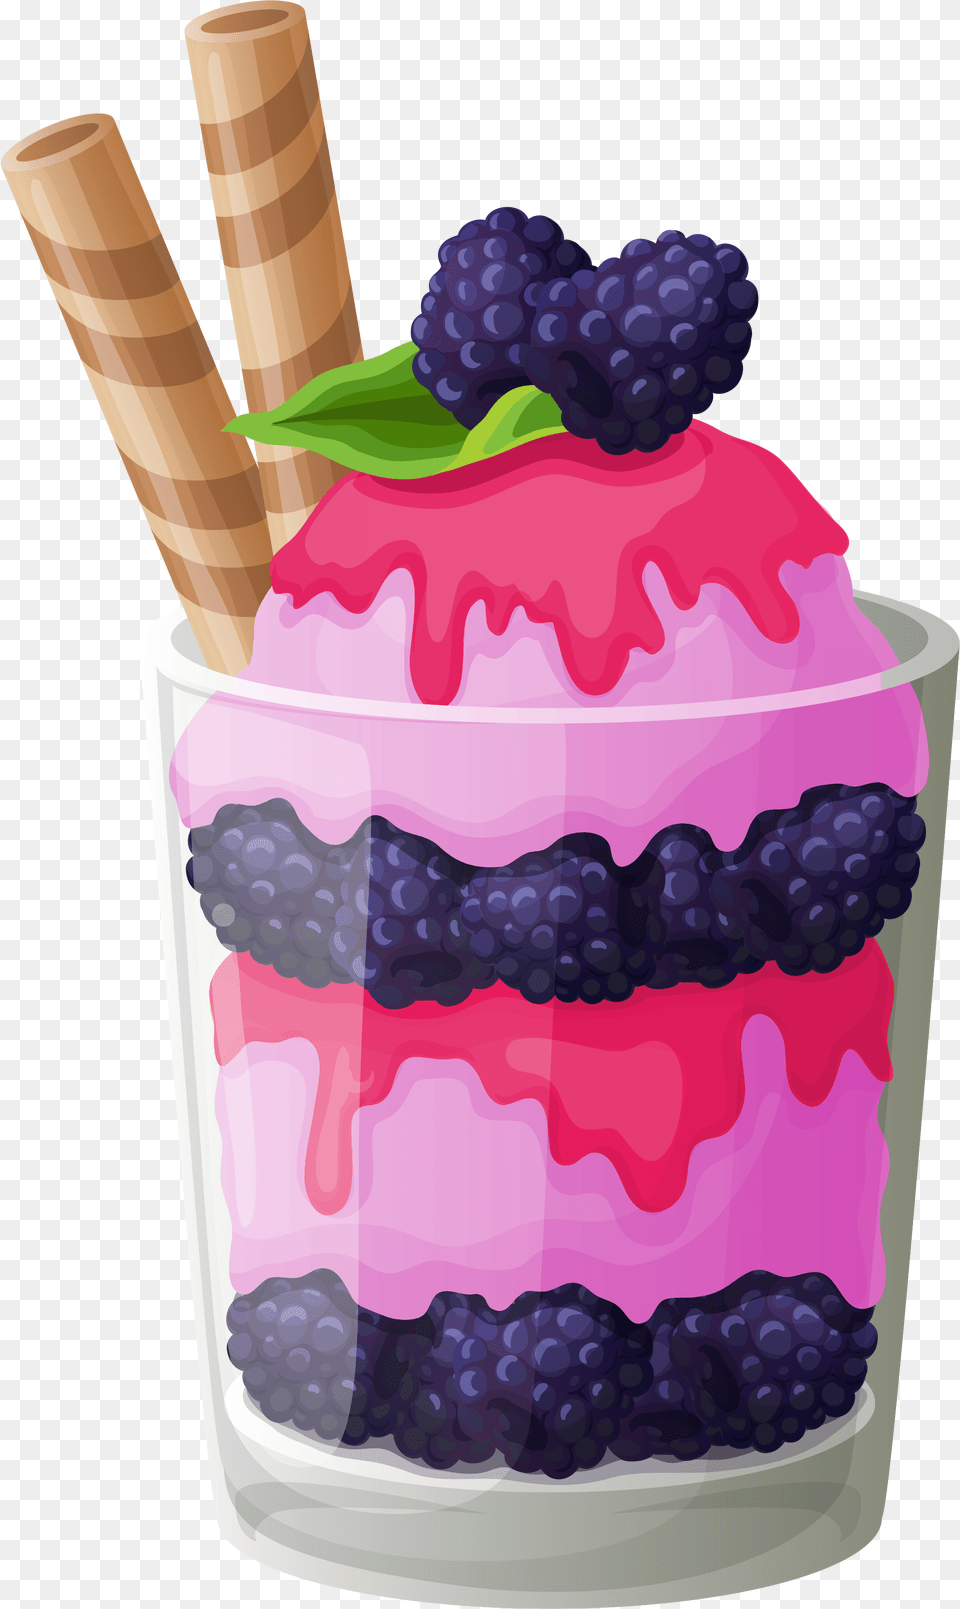 Blackberry Ice Cream Images, Food, Dessert, Ice Cream, Birthday Cake Png Image